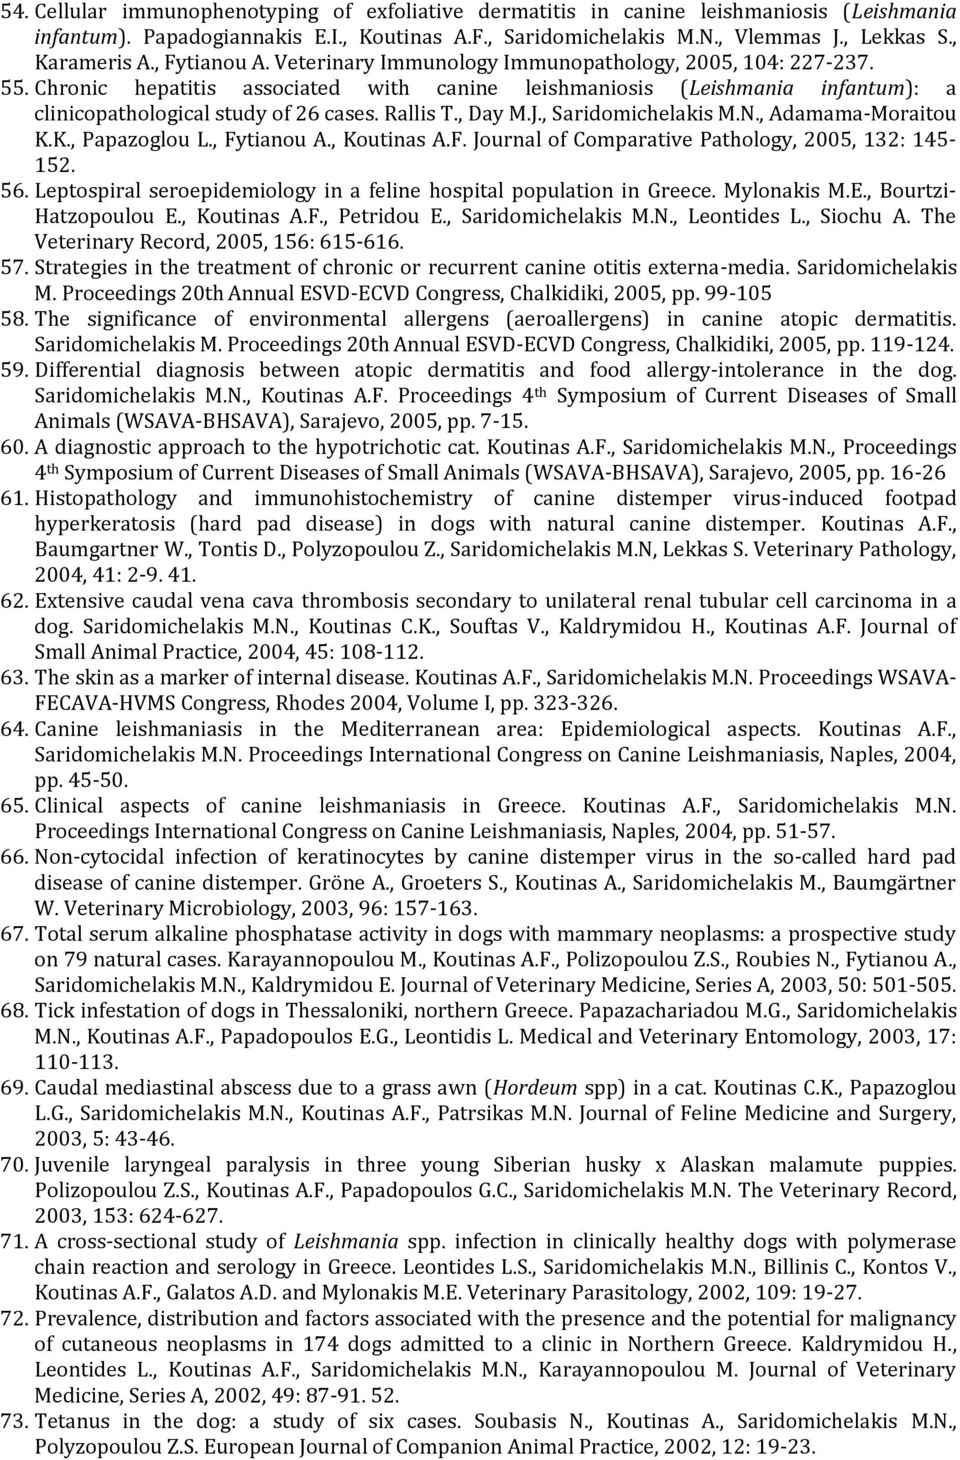 Rallis T., Day M.J., Saridomichelakis M.N., Adamama Moraitou K.K., Papazoglou L., Fytianou A., Koutinas A.F. Journal of Comparative Pathology, 2005, 132: 145 152. 56.